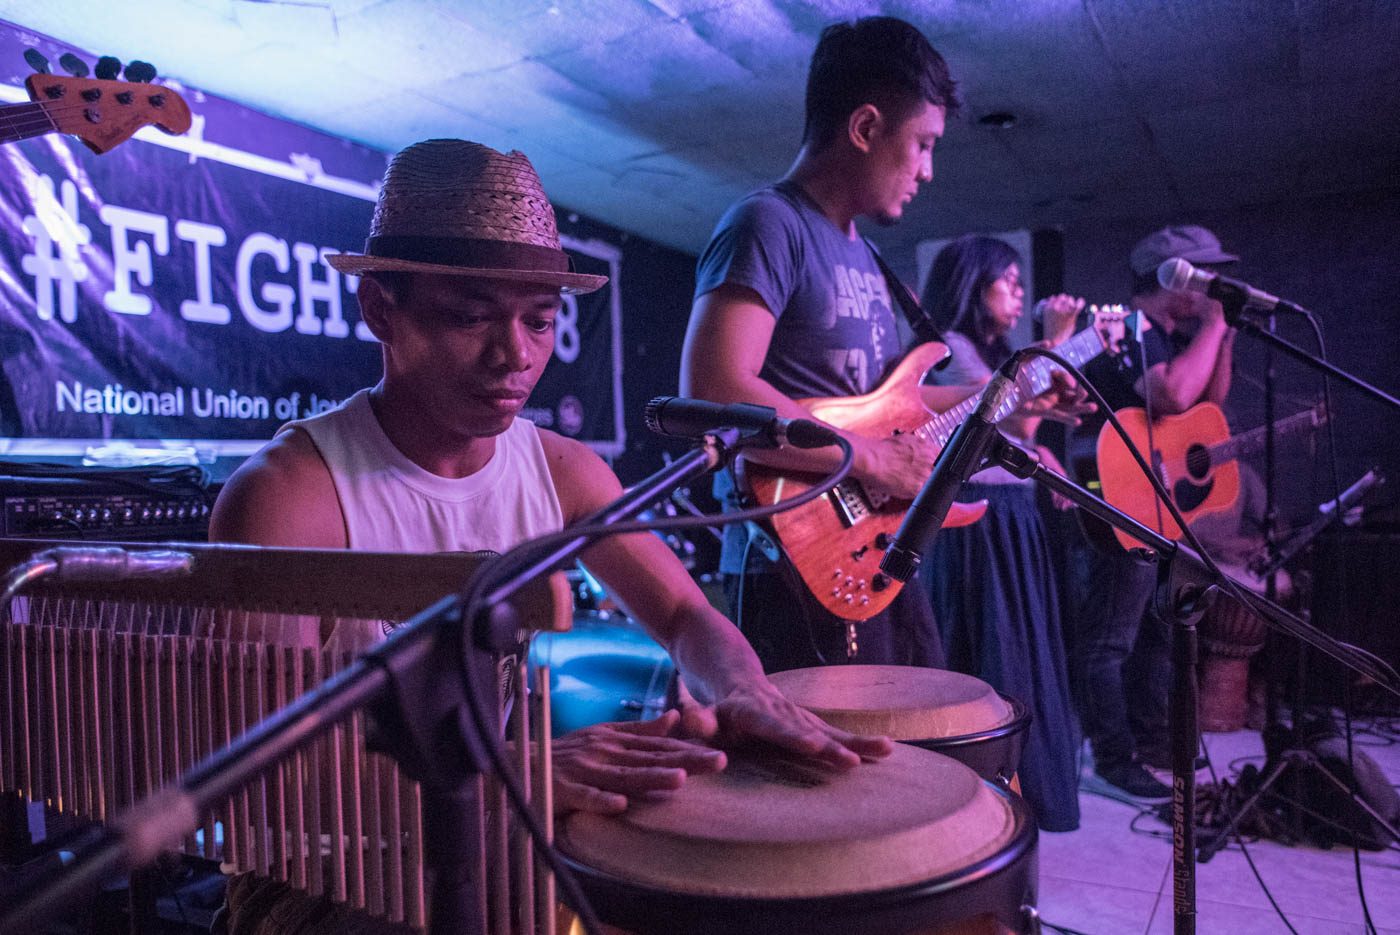 Local artists unite in a benefit concert for families of Ampatuan massacre victims